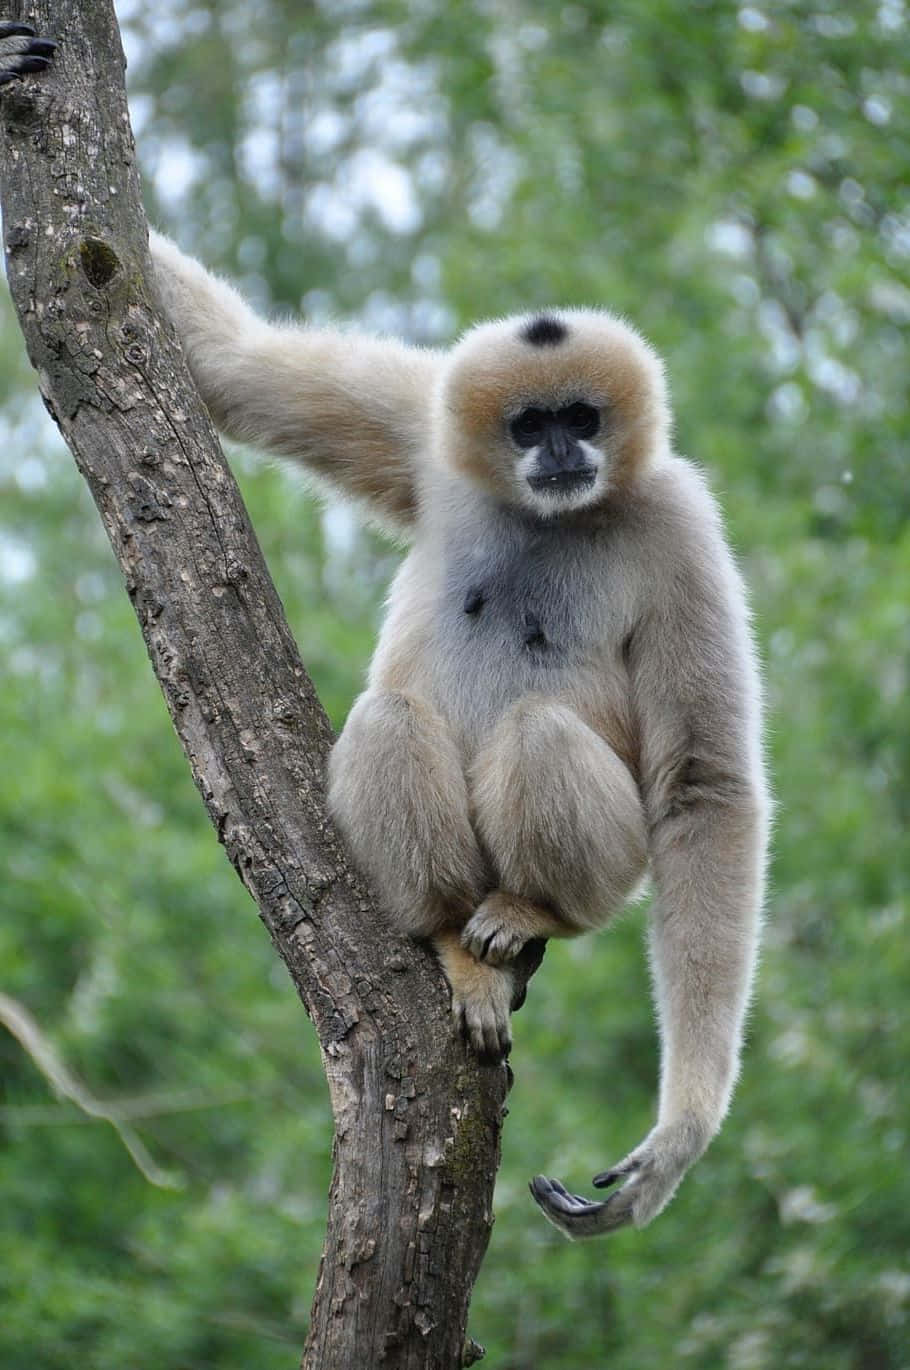 A Monkey Is Sitting On A Tree Branch